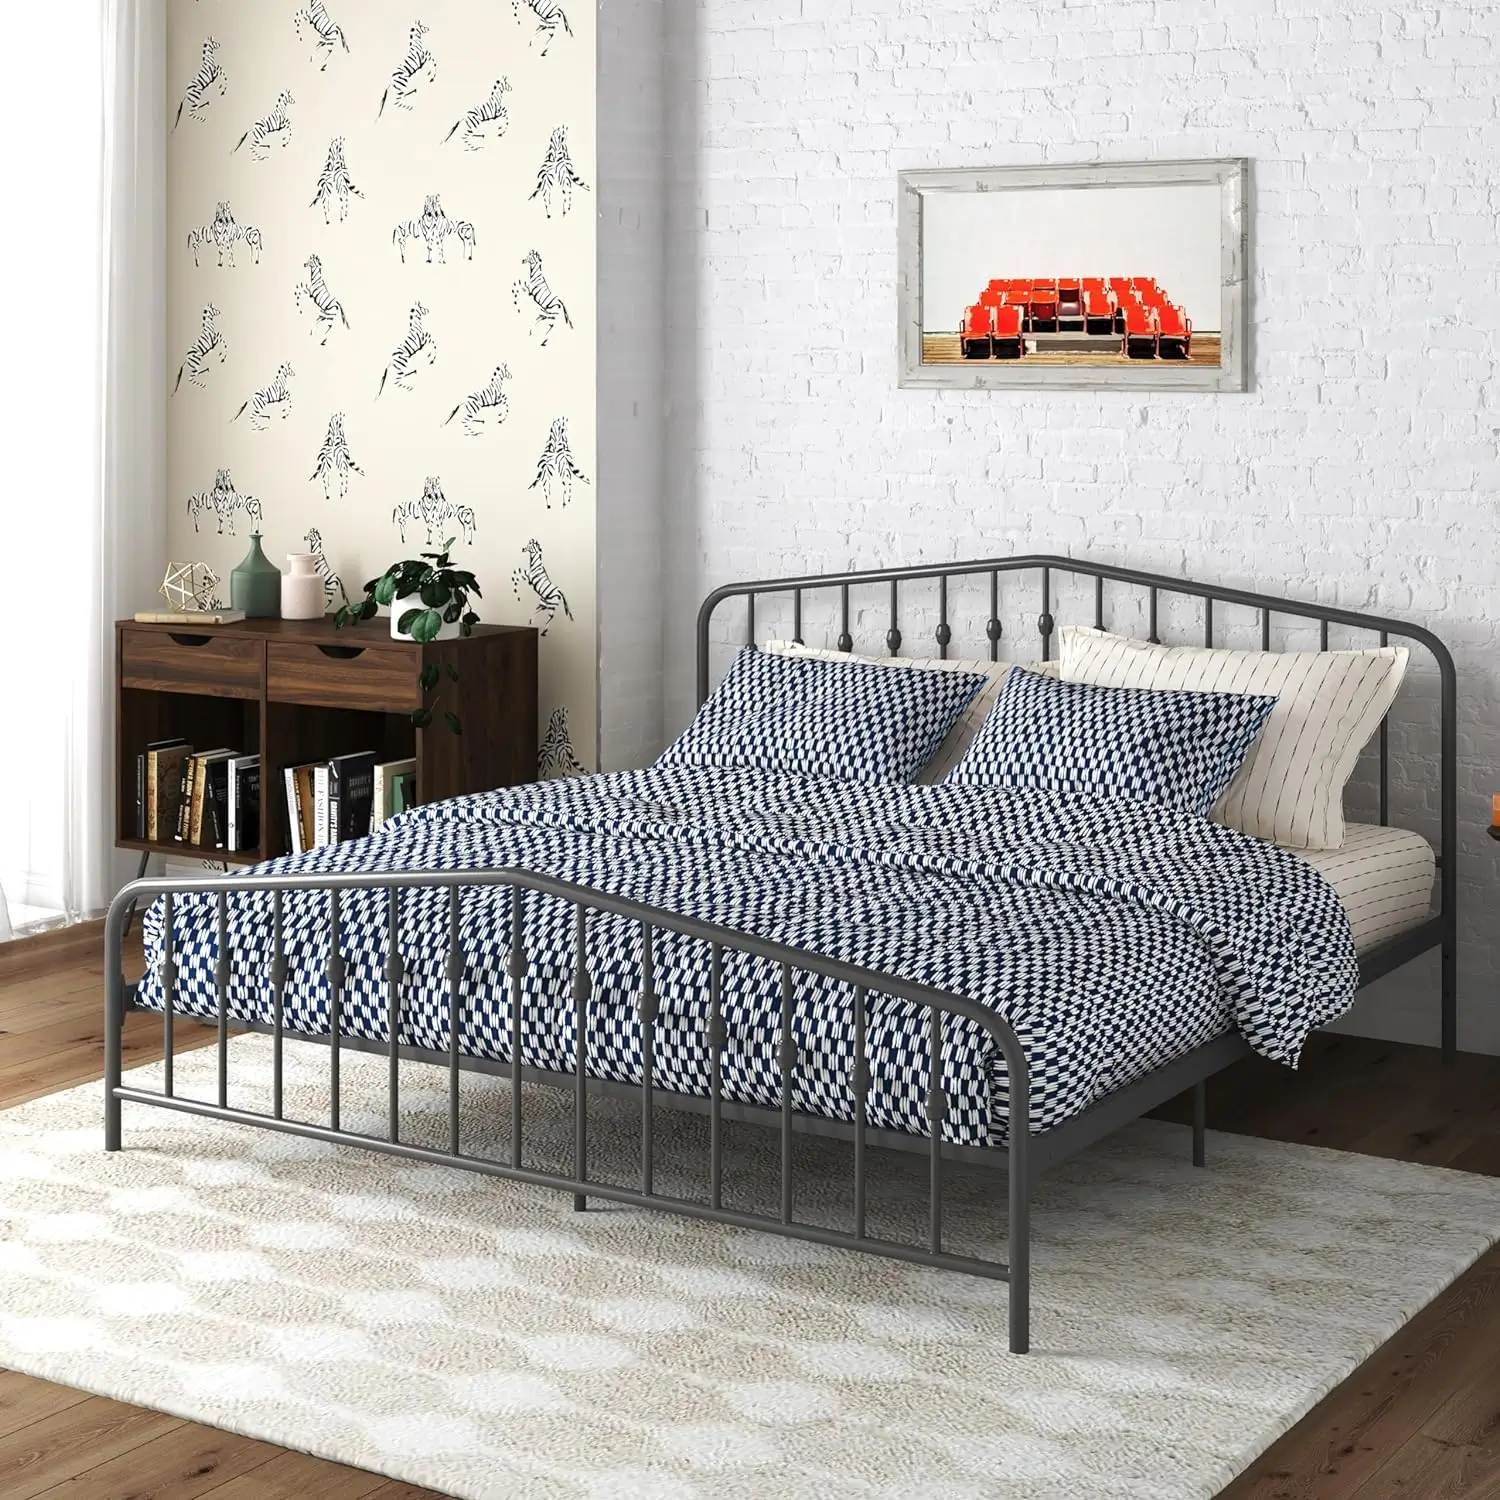 Novogratz Bushwick Metal Bed - Easy to Assemble